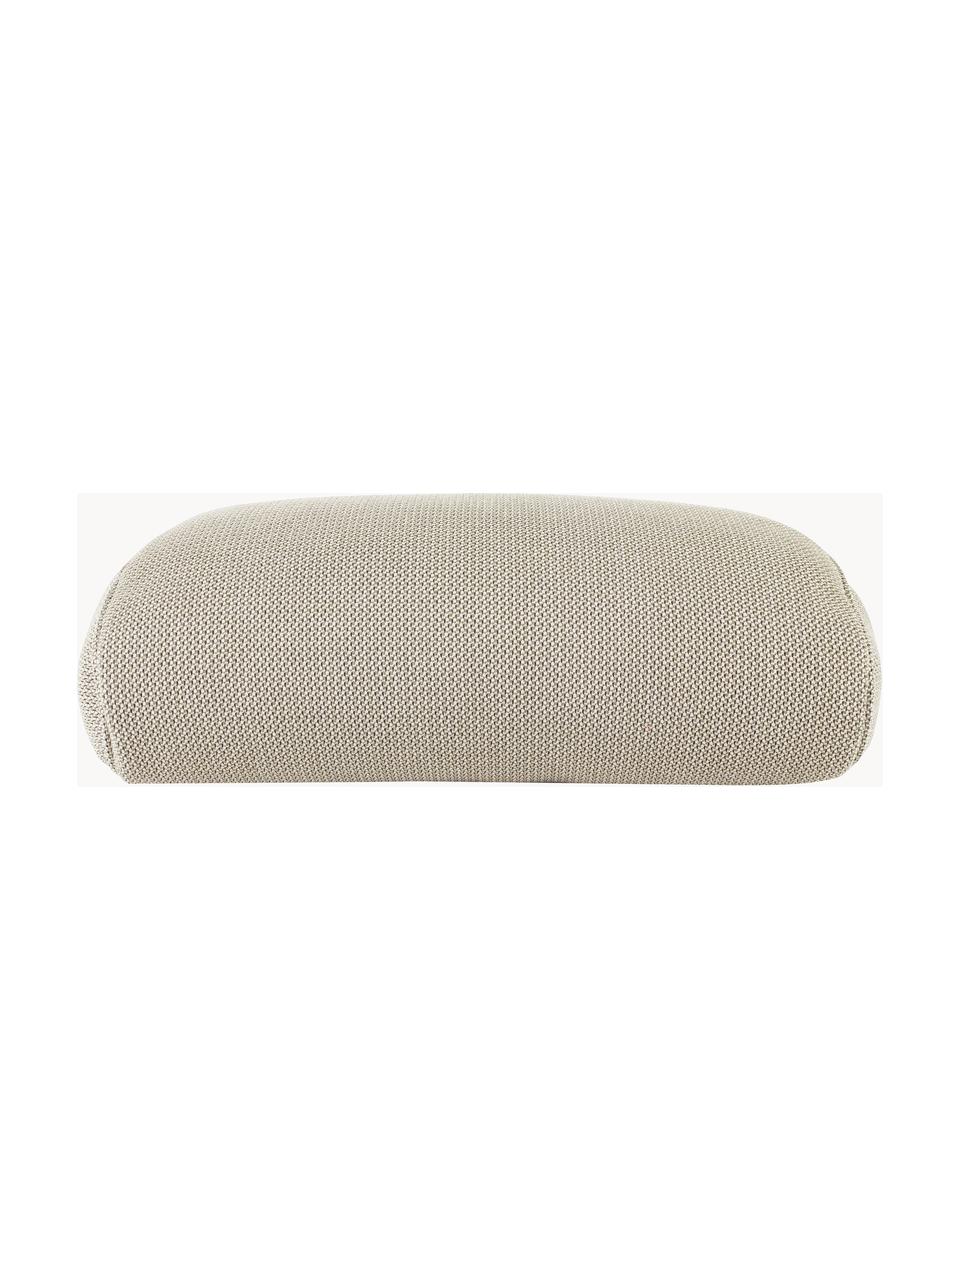 Cojín artesanal para exterior Pillow, Tapizado: 70% PAN + 30% PES, imperm, Beige claro, An 50 x L 30 cm